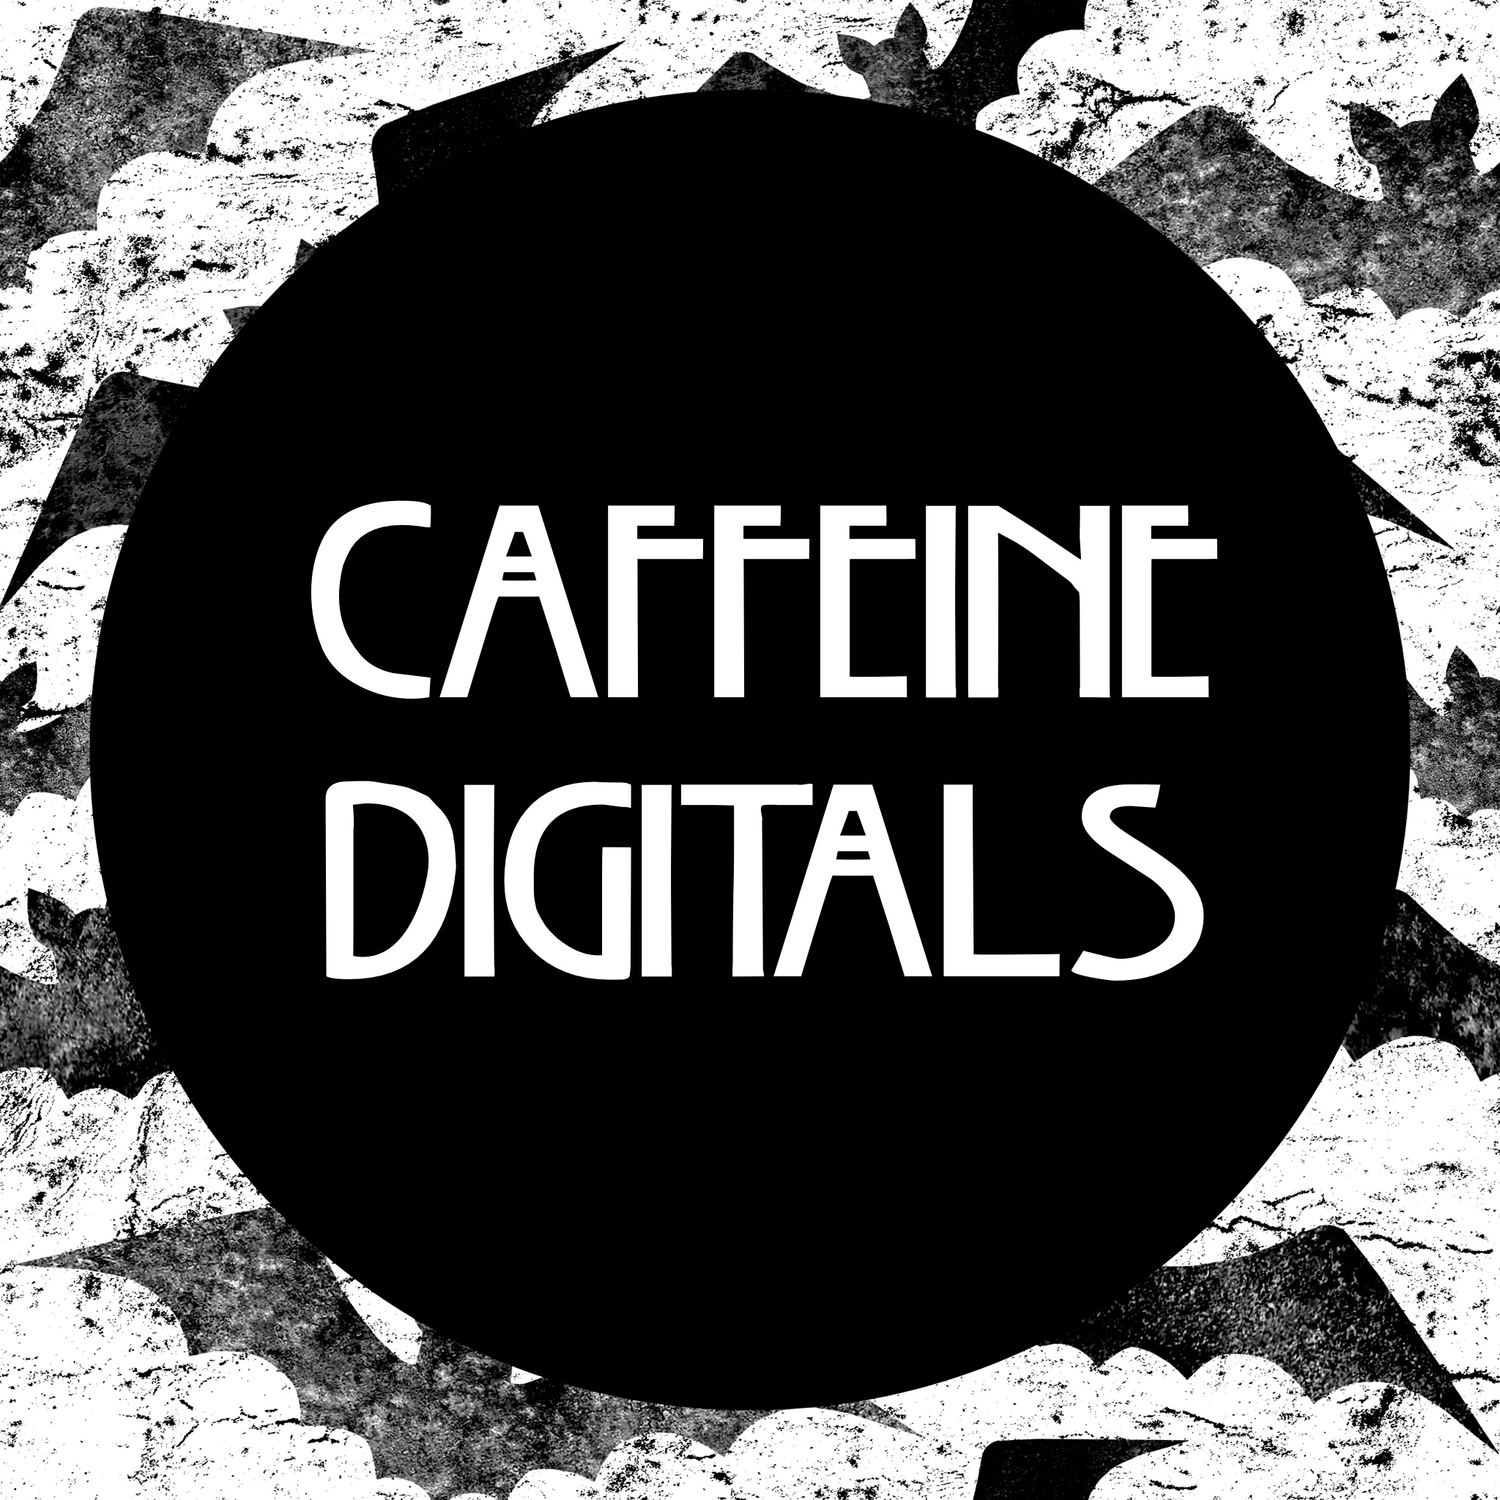 Caffeine Digitals